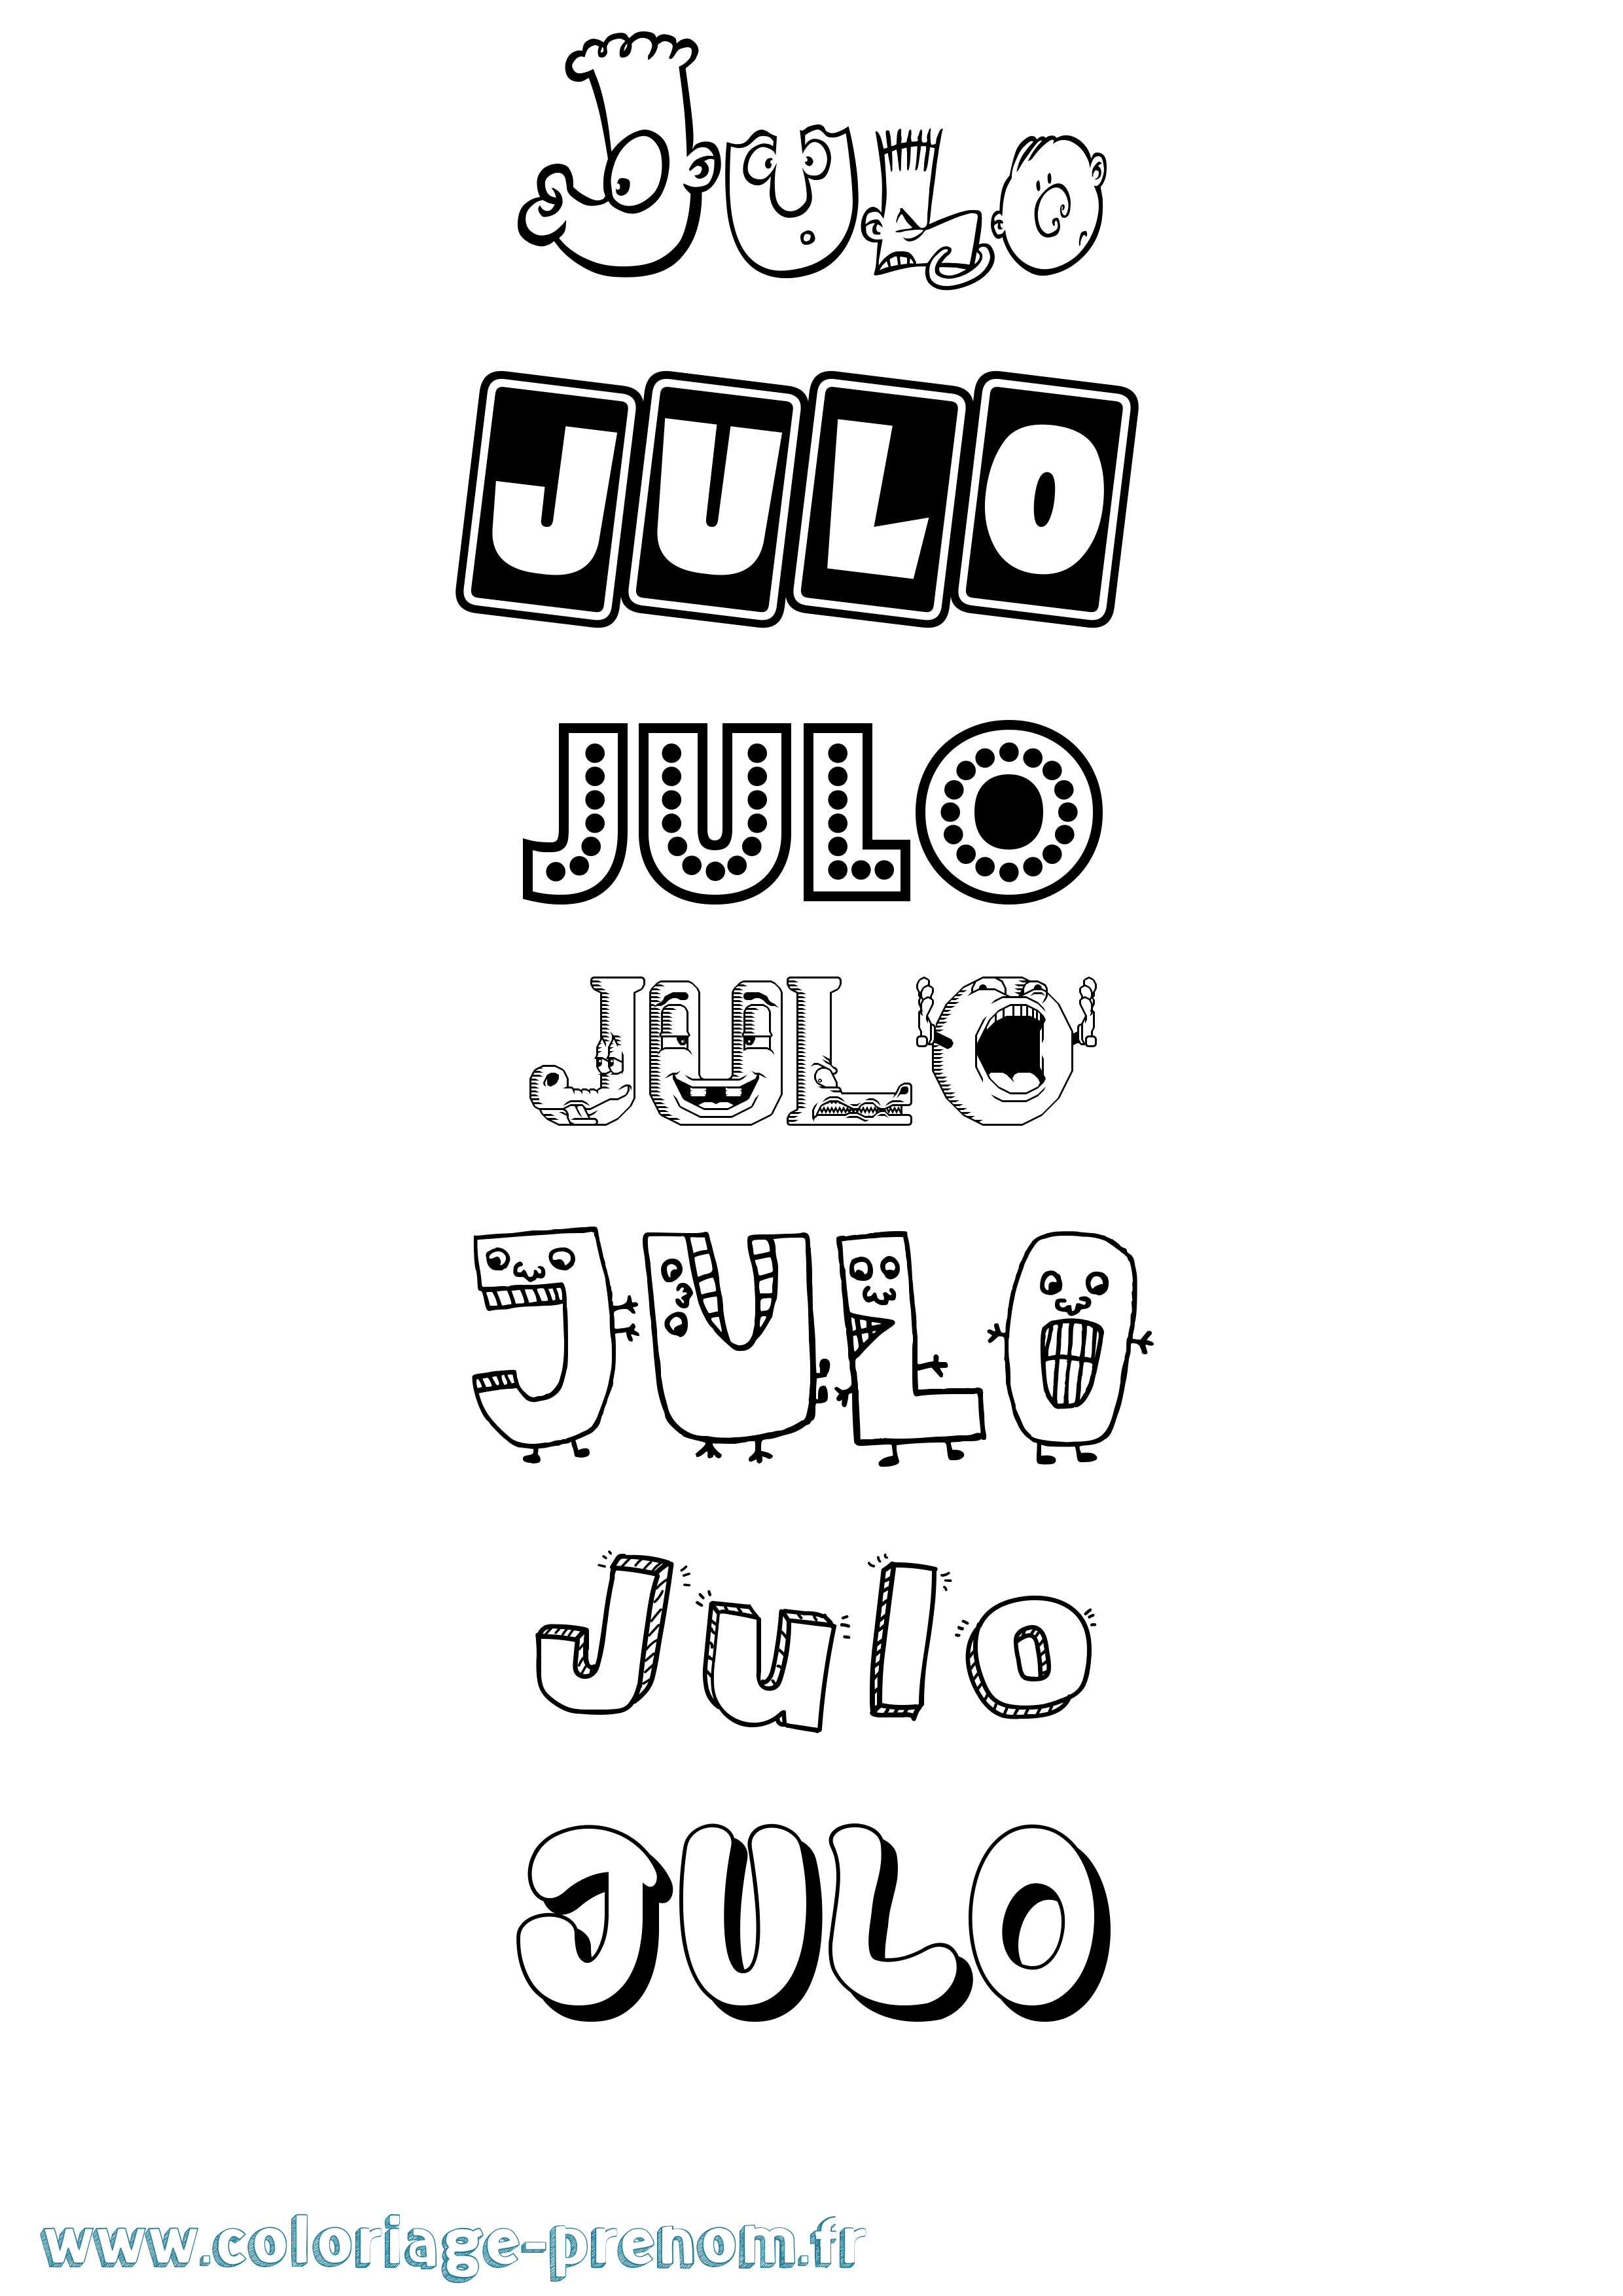 Coloriage prénom Julo Fun